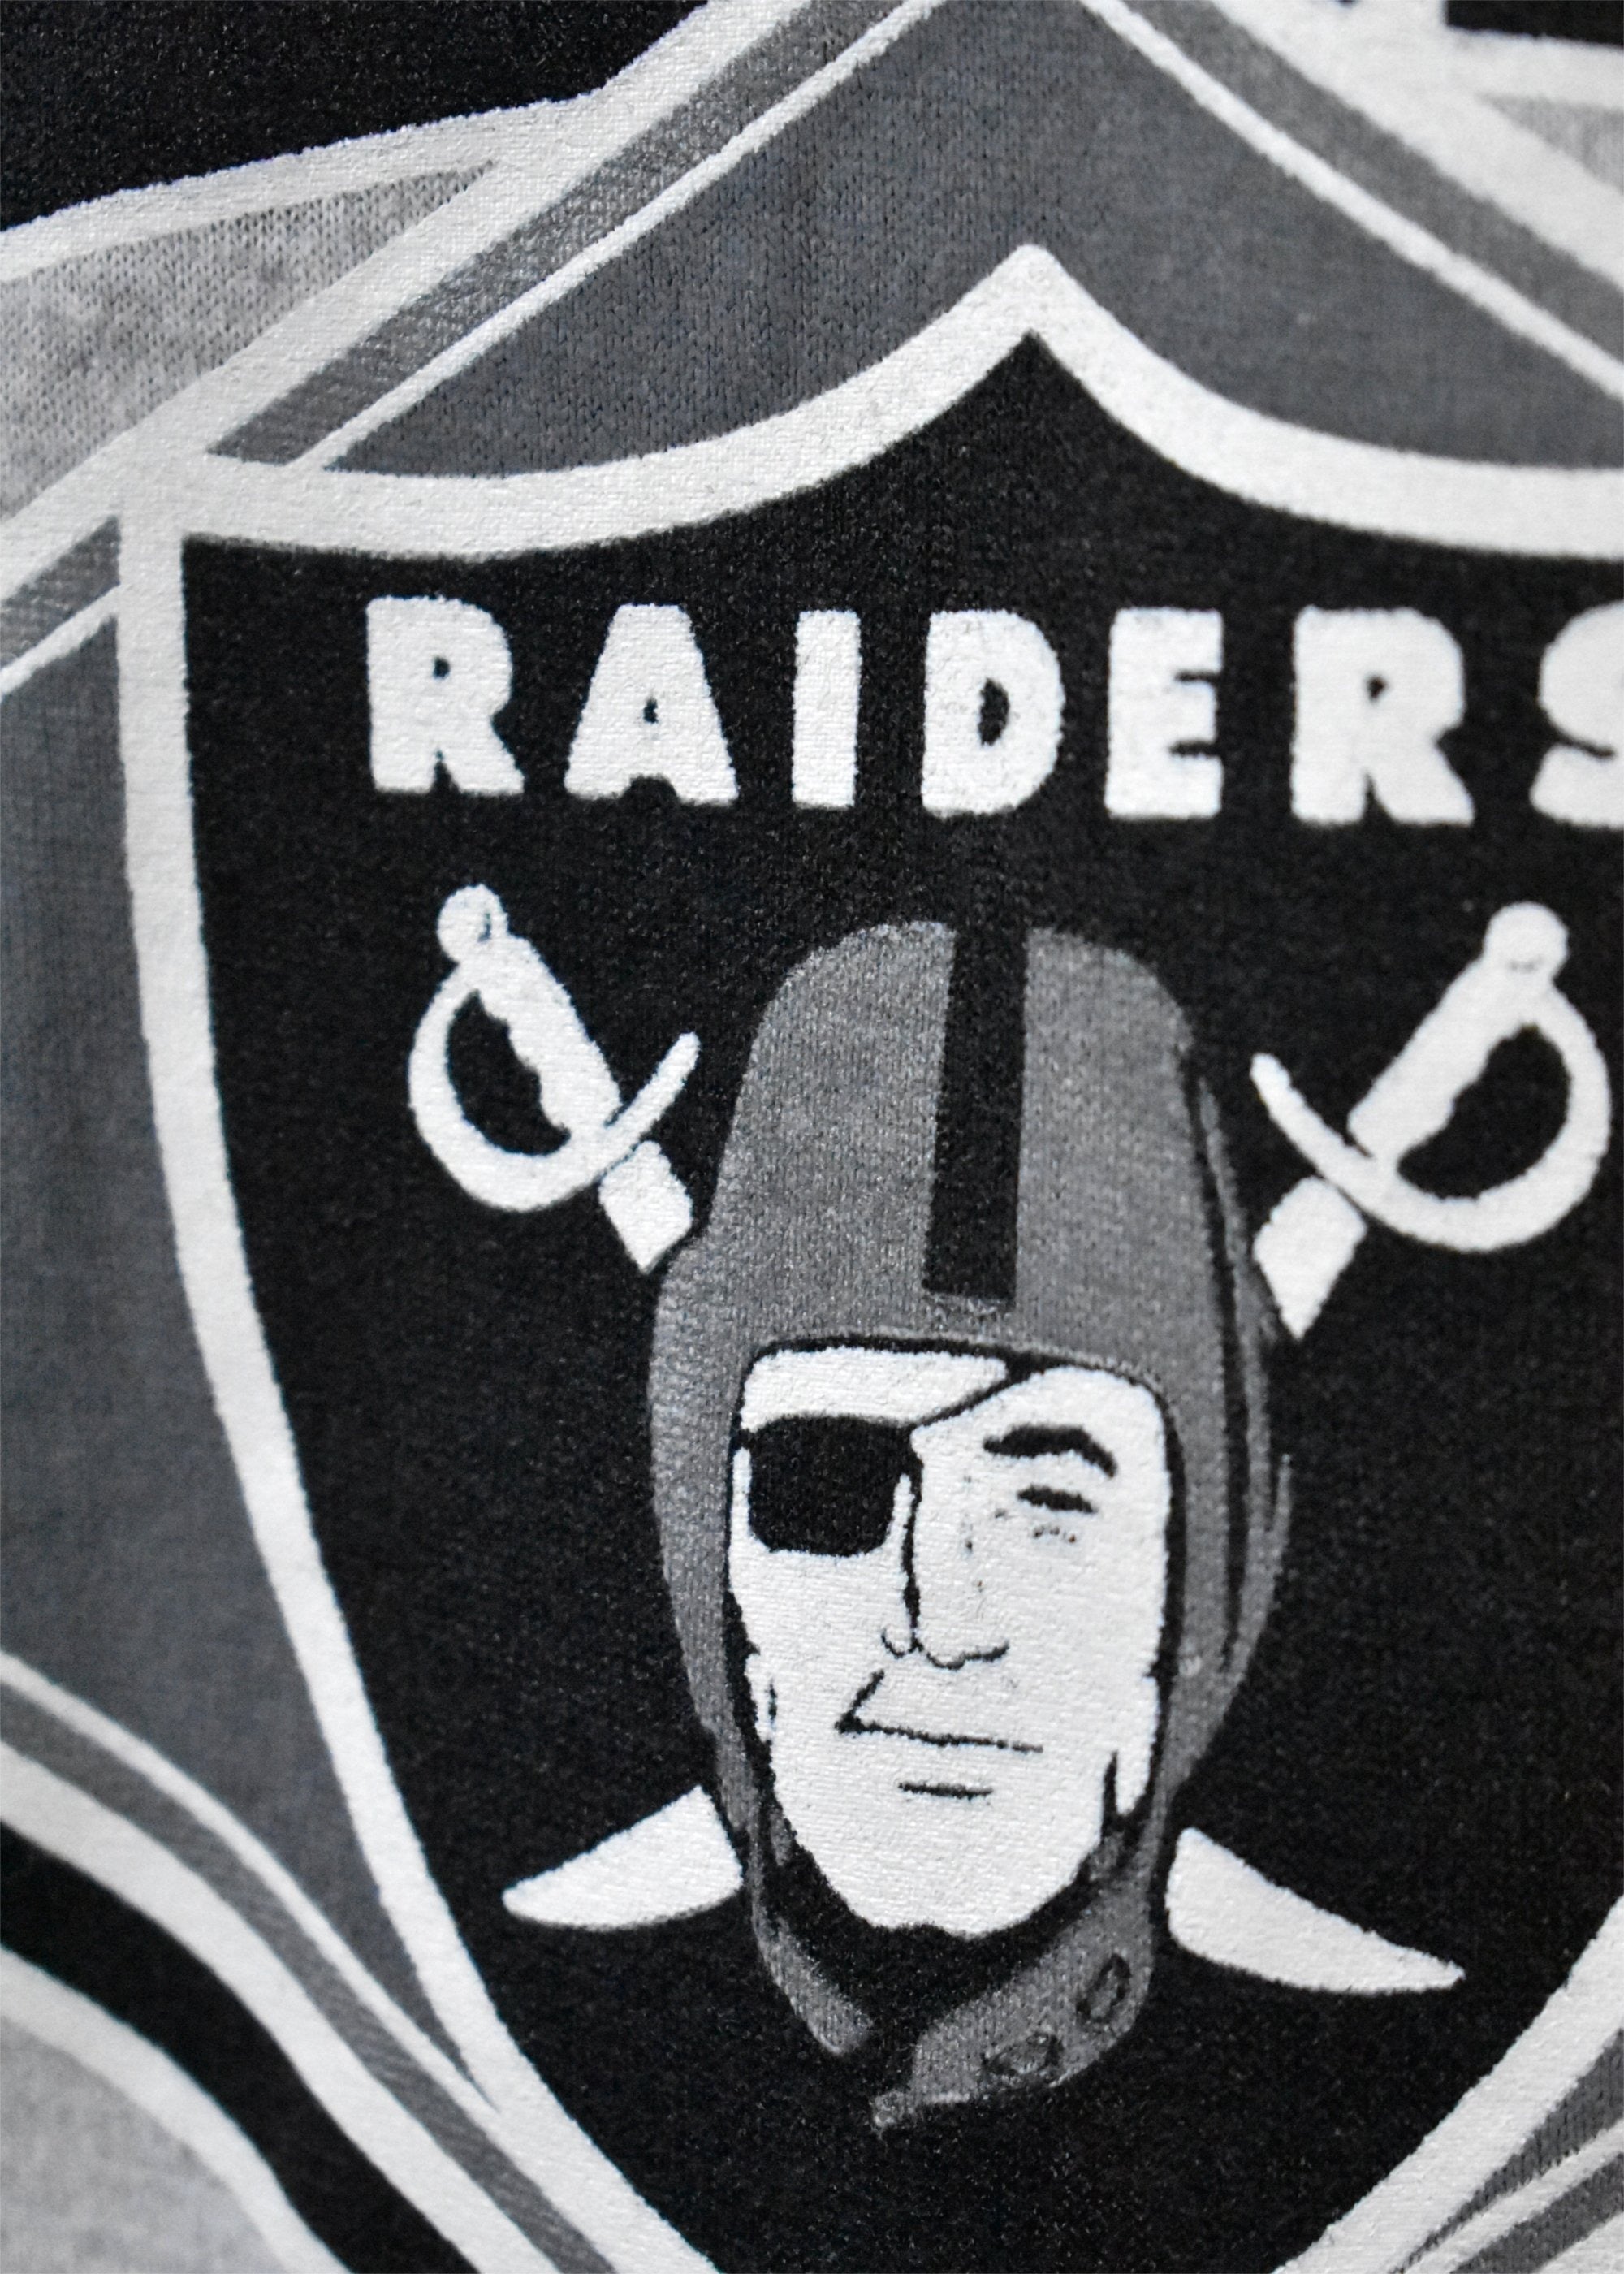 Los Angeles Raiders Shirt Raider Posts - Zerelam